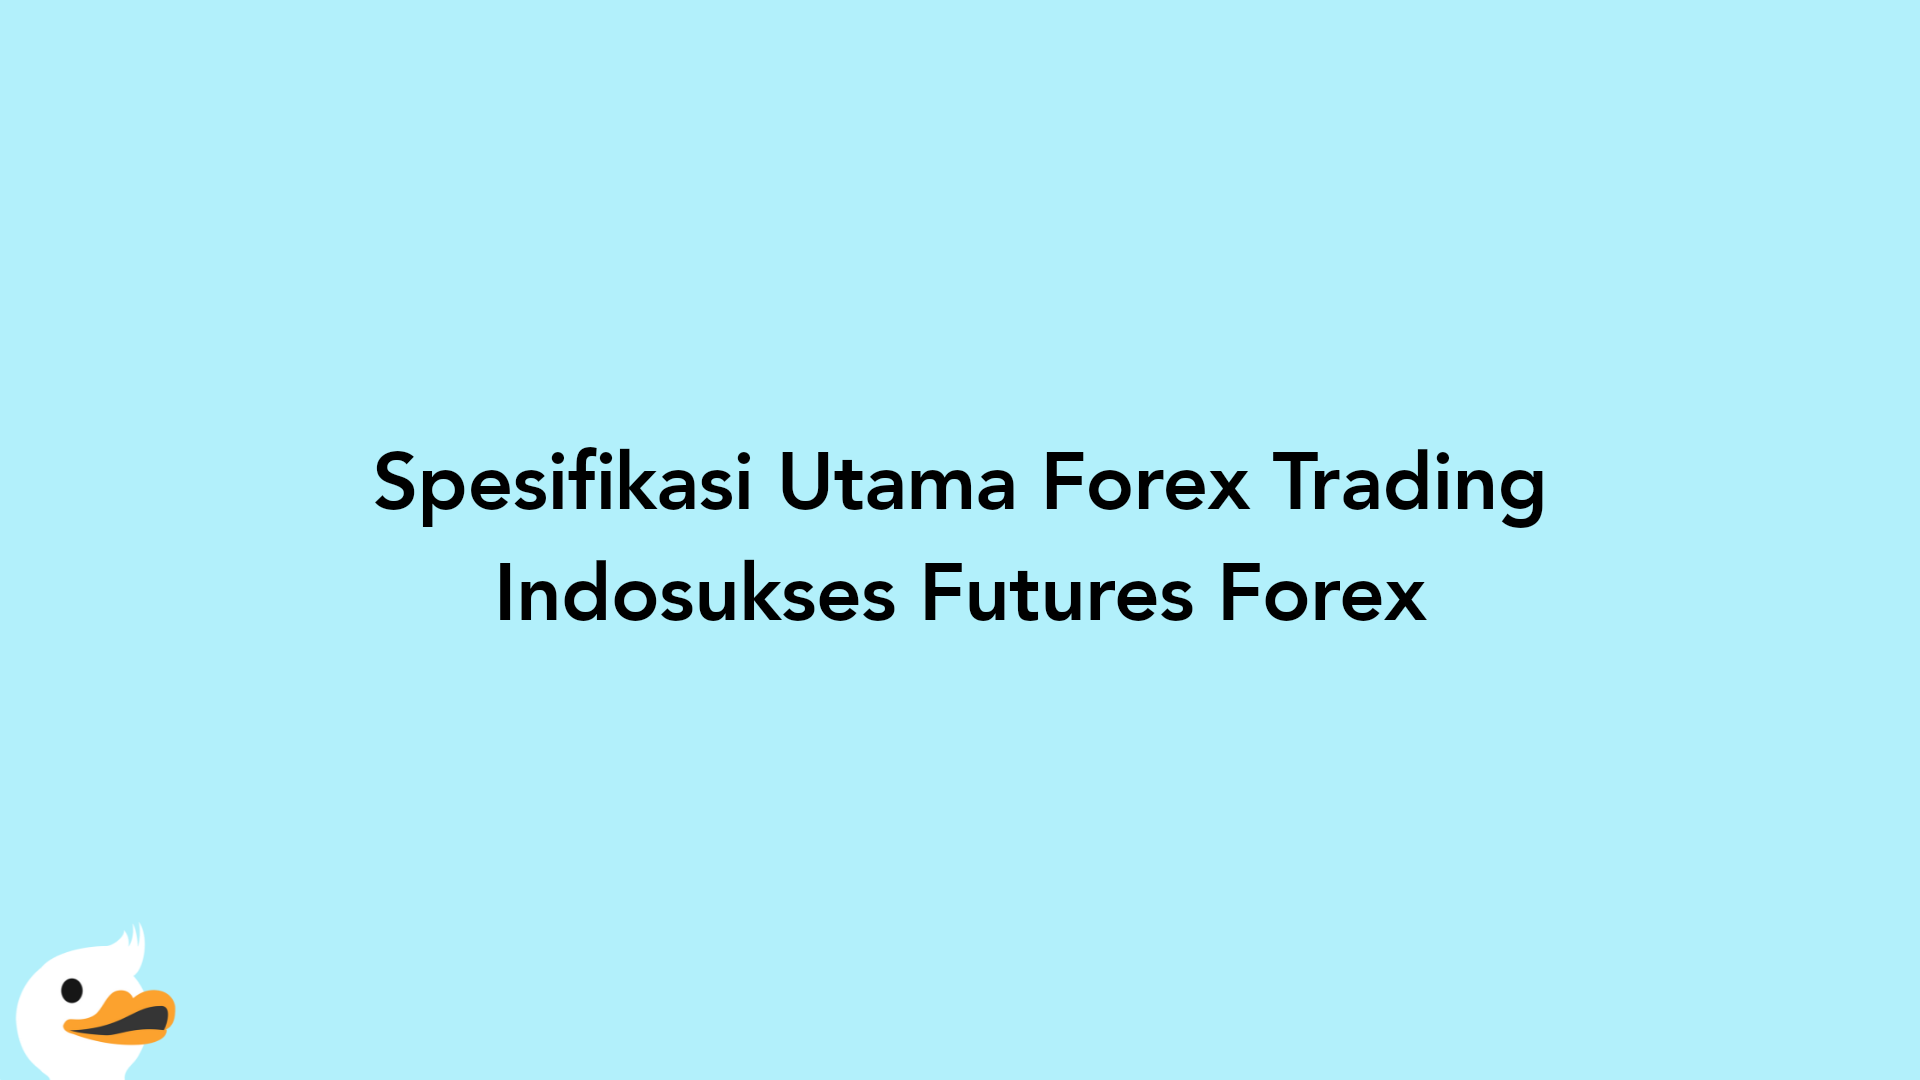 Spesifikasi Utama Forex Trading Indosukses Futures Forex